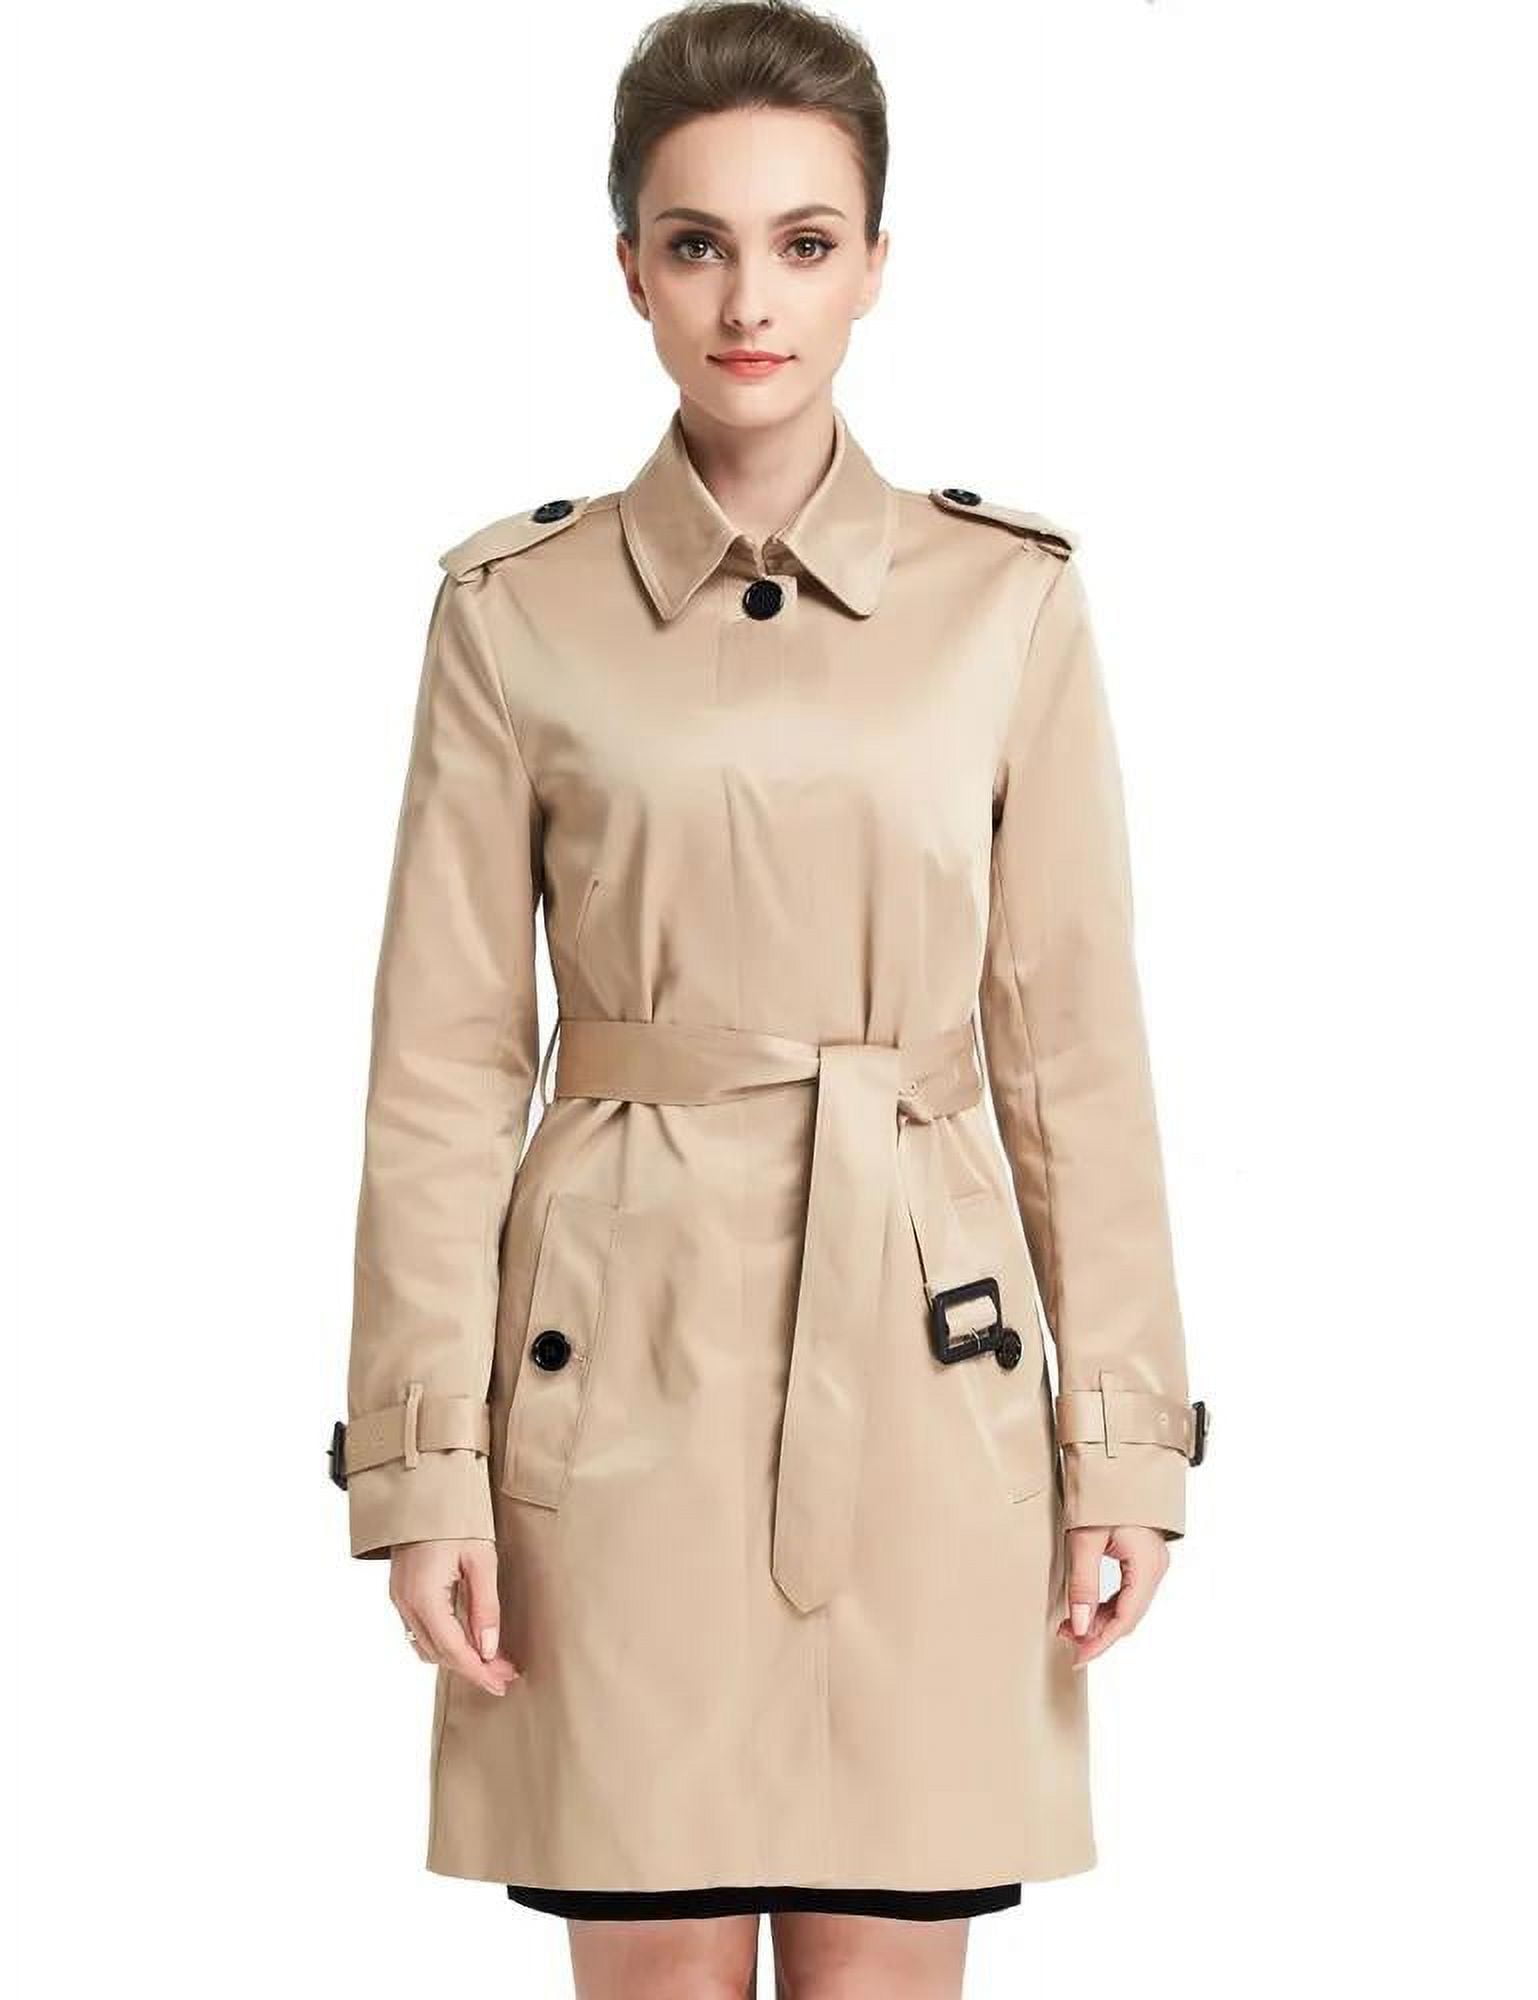 Camii Mia Women's Trench Coat Windbreaker Coat Outwear - Walmart.com